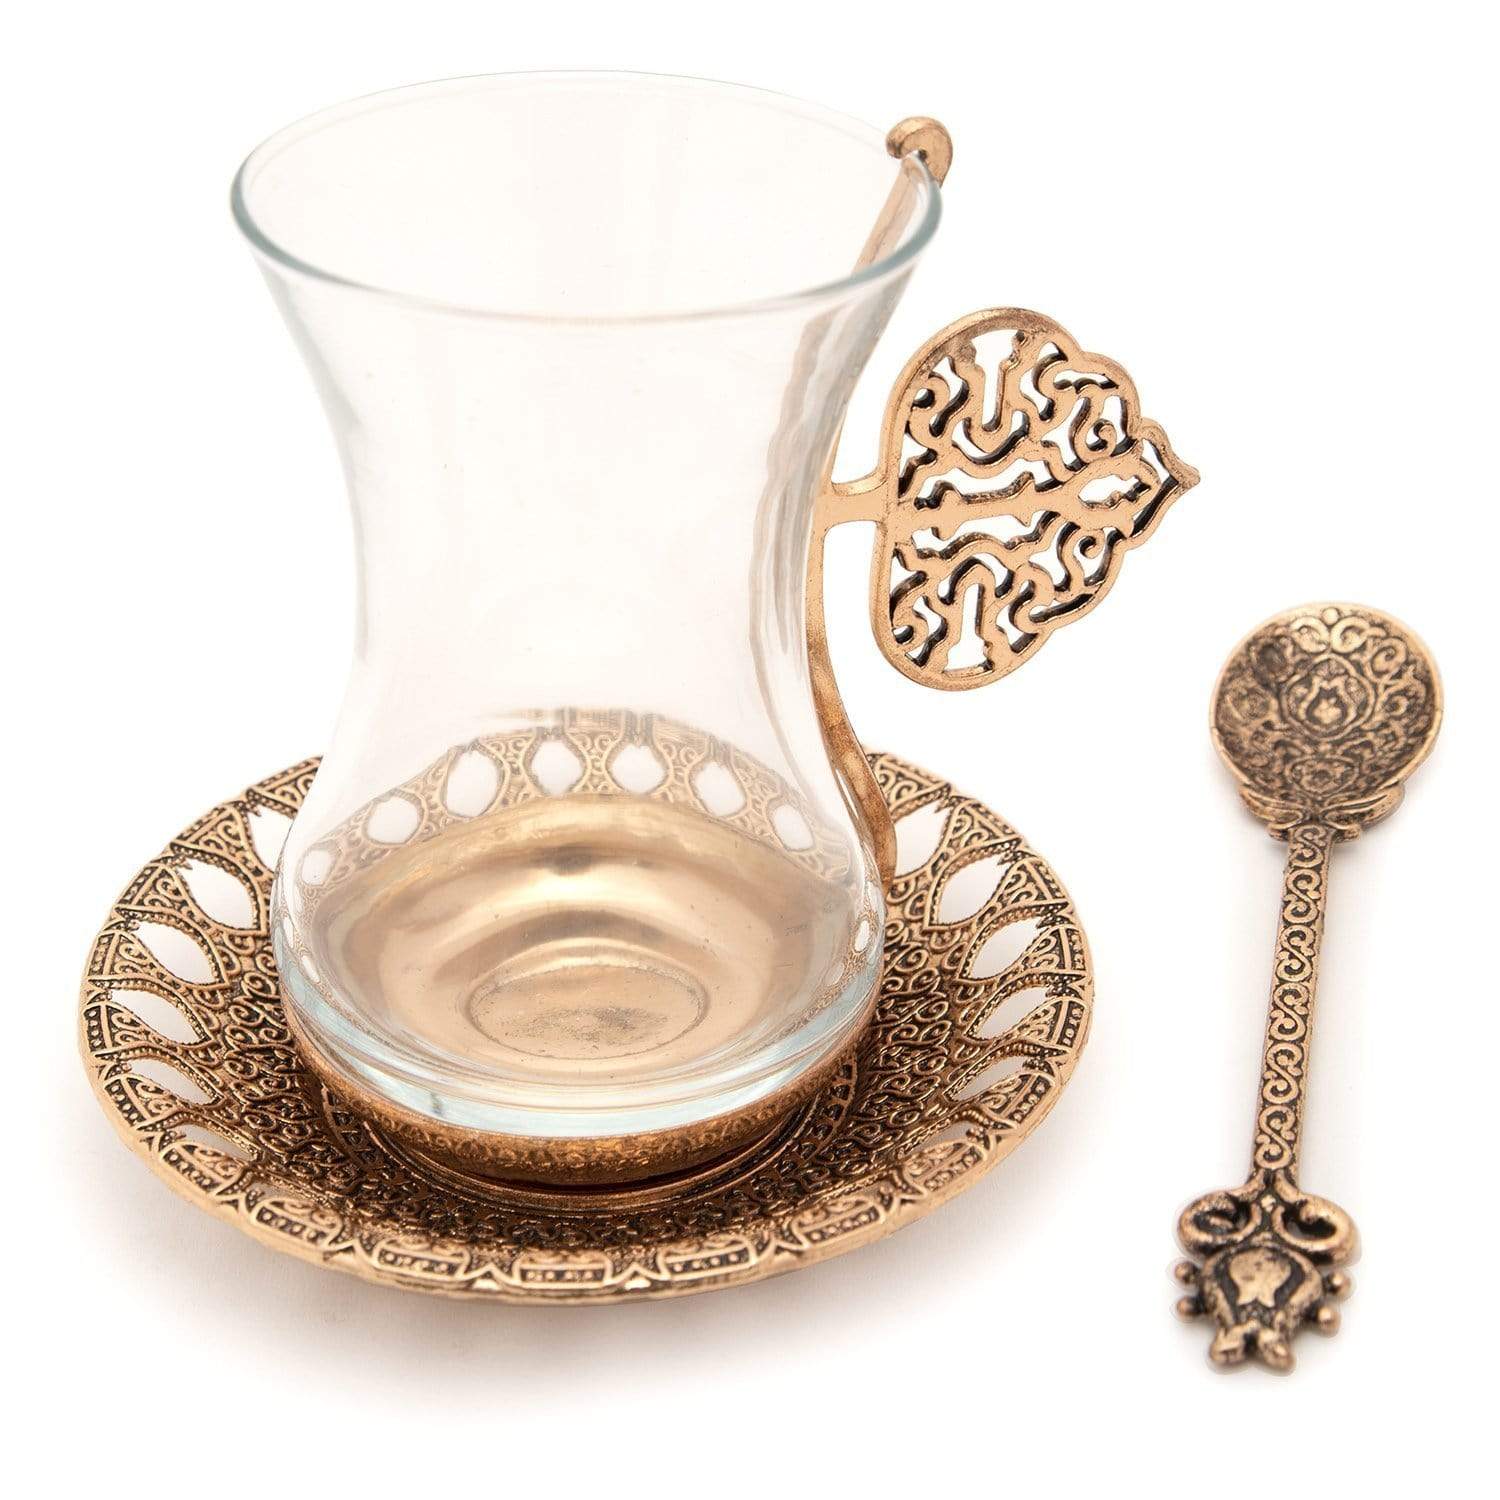 Otantik CB1014K Tea Cup and Saucer Set - Antique Gold, 19 Piece - CB1014K - Jashanmal Home